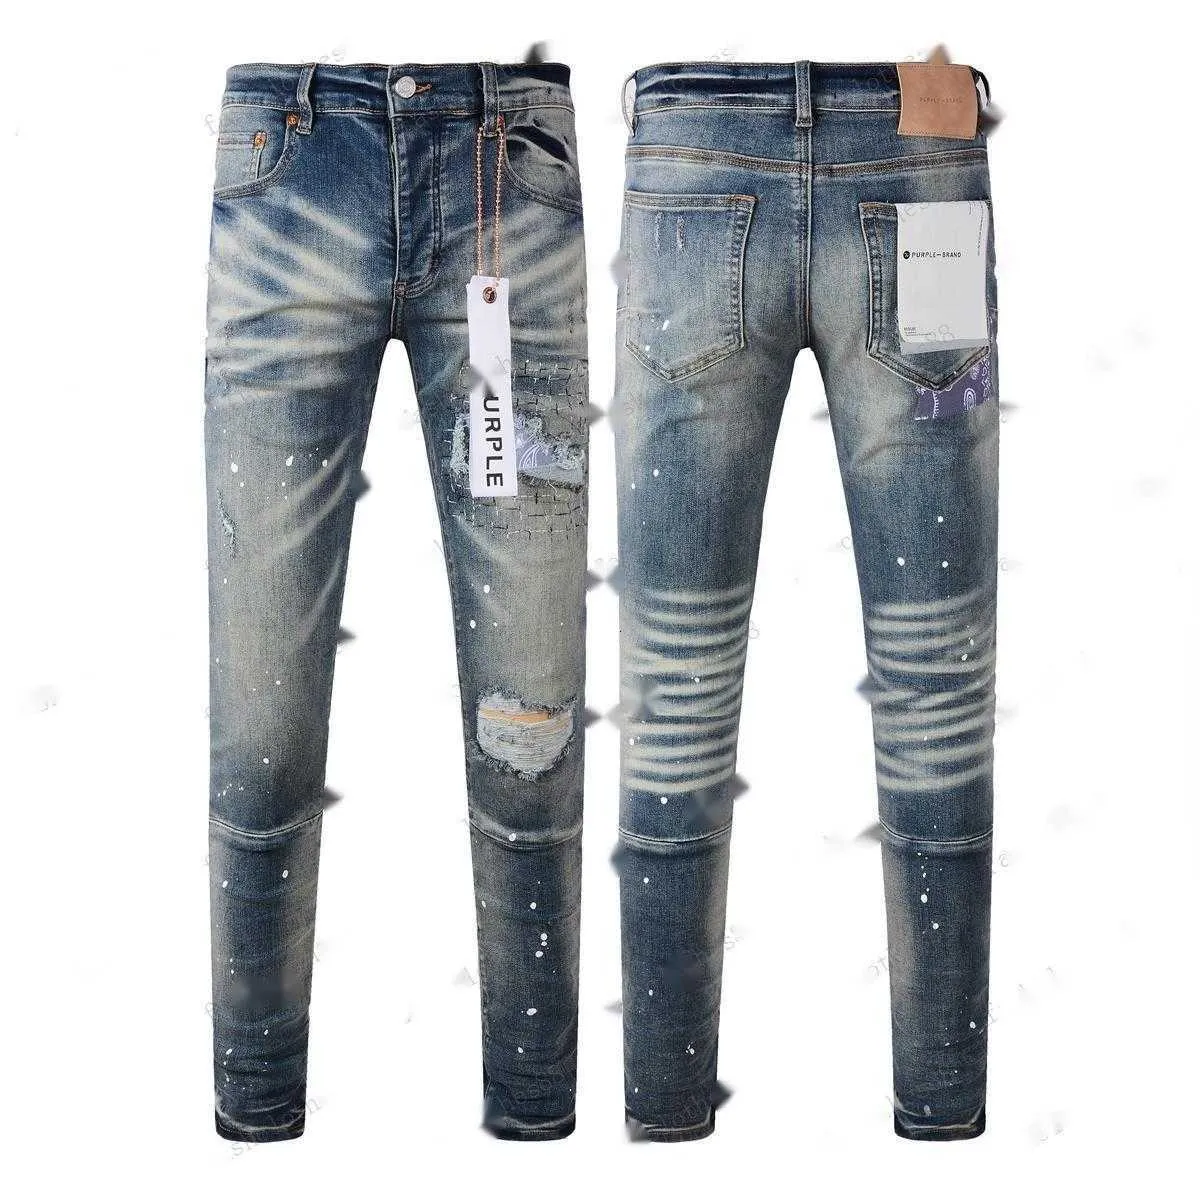 Lila jeans denim byxor herr designer svarta byxor avancerad kvalitet rak design retro streetwear casual svettbyxor joggar pant 73e6